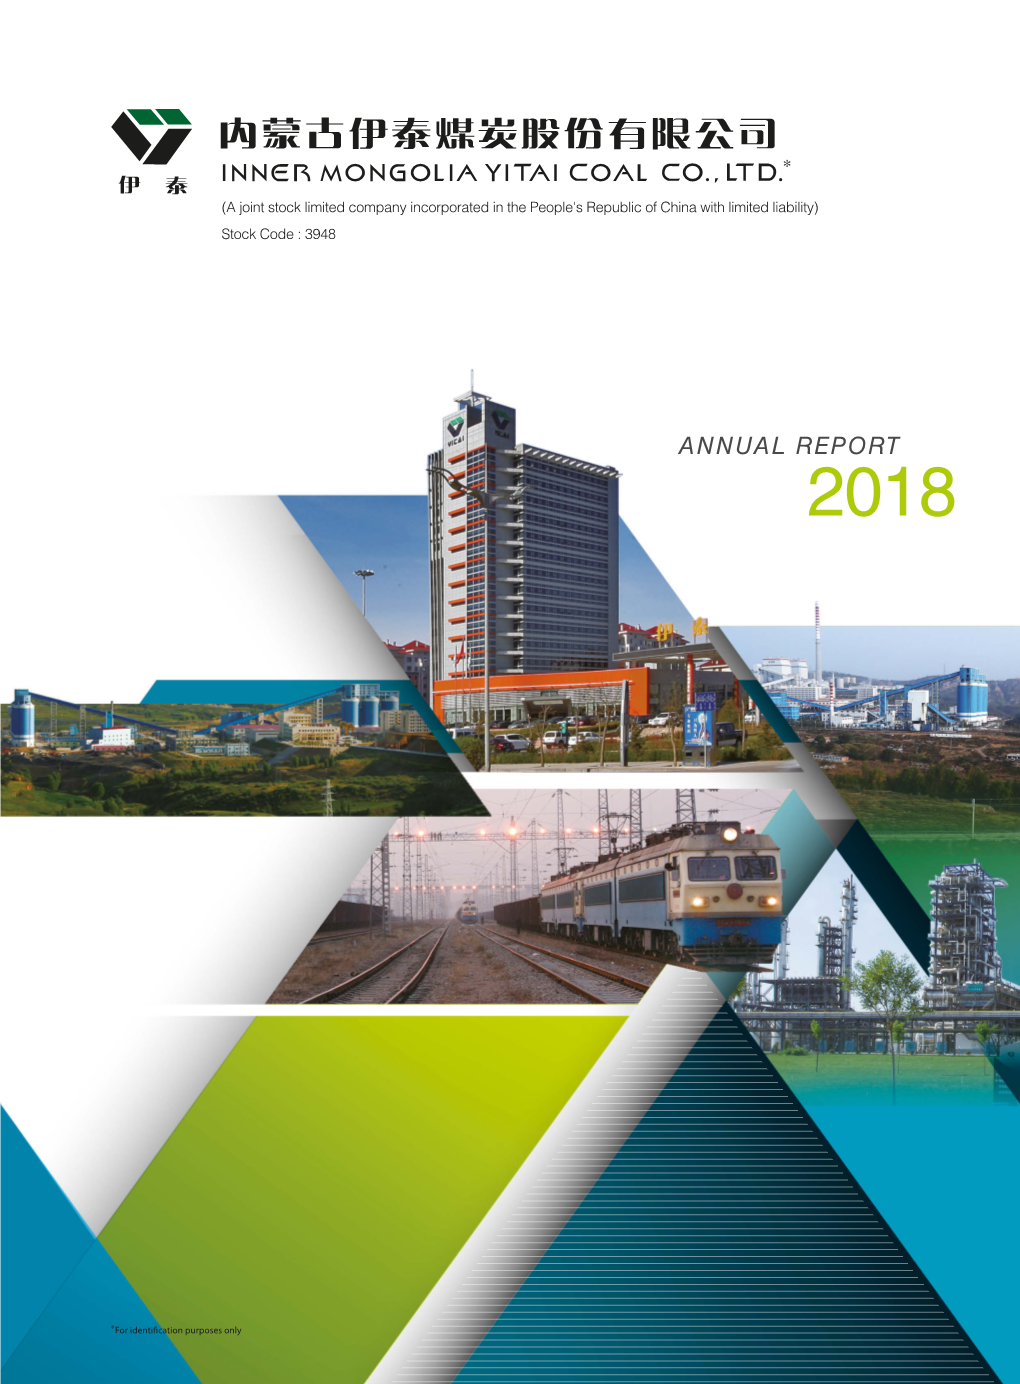 Annual Report 2018 2018 2018 Annual Rerort 年報 Important Notice